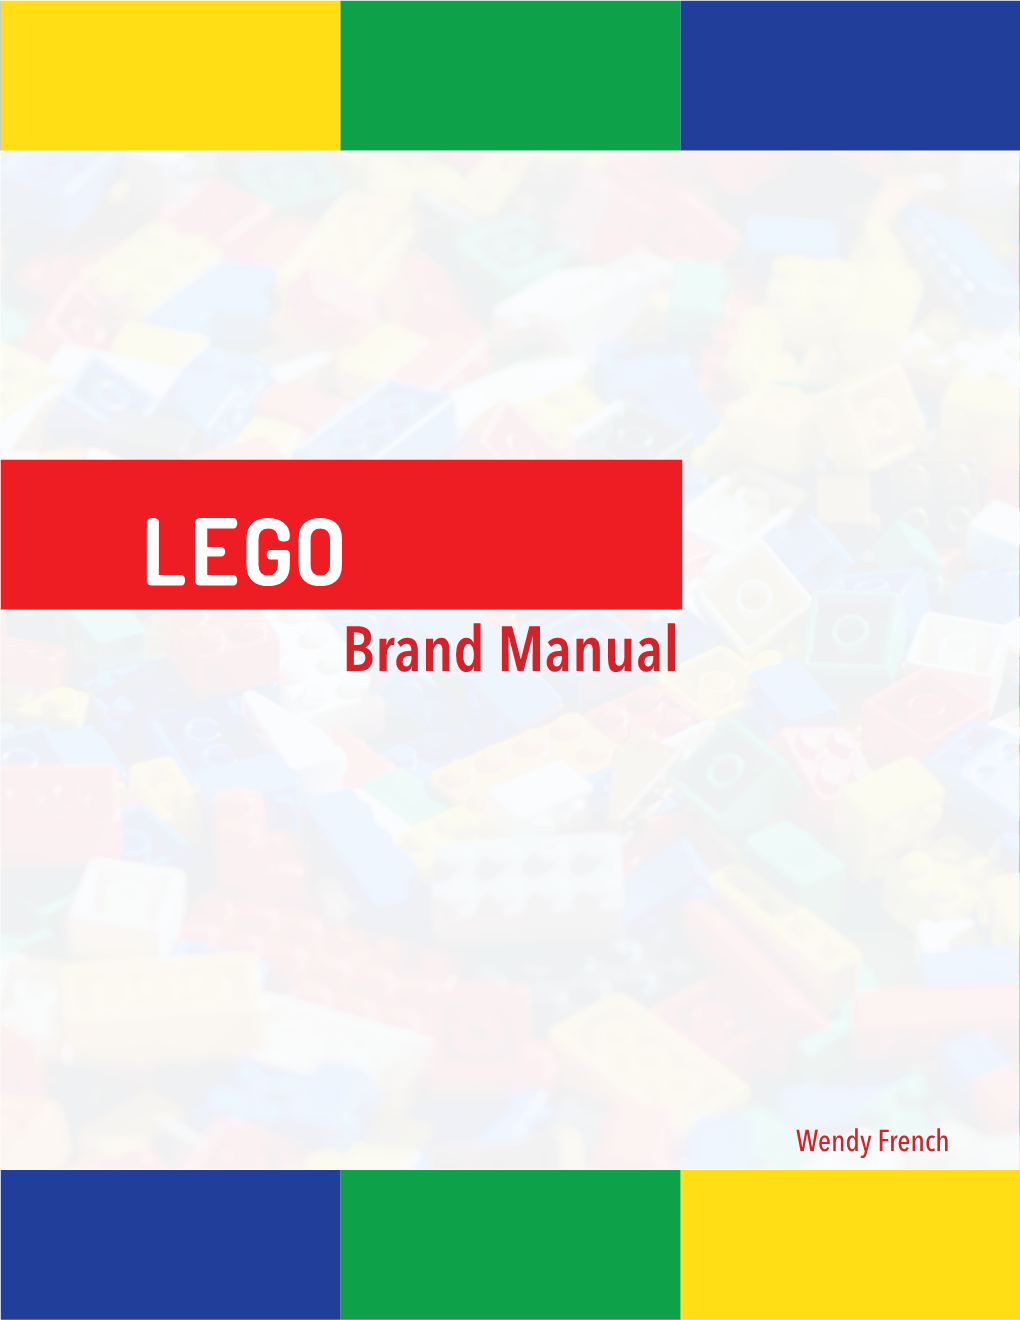 LEGO Brand Manual